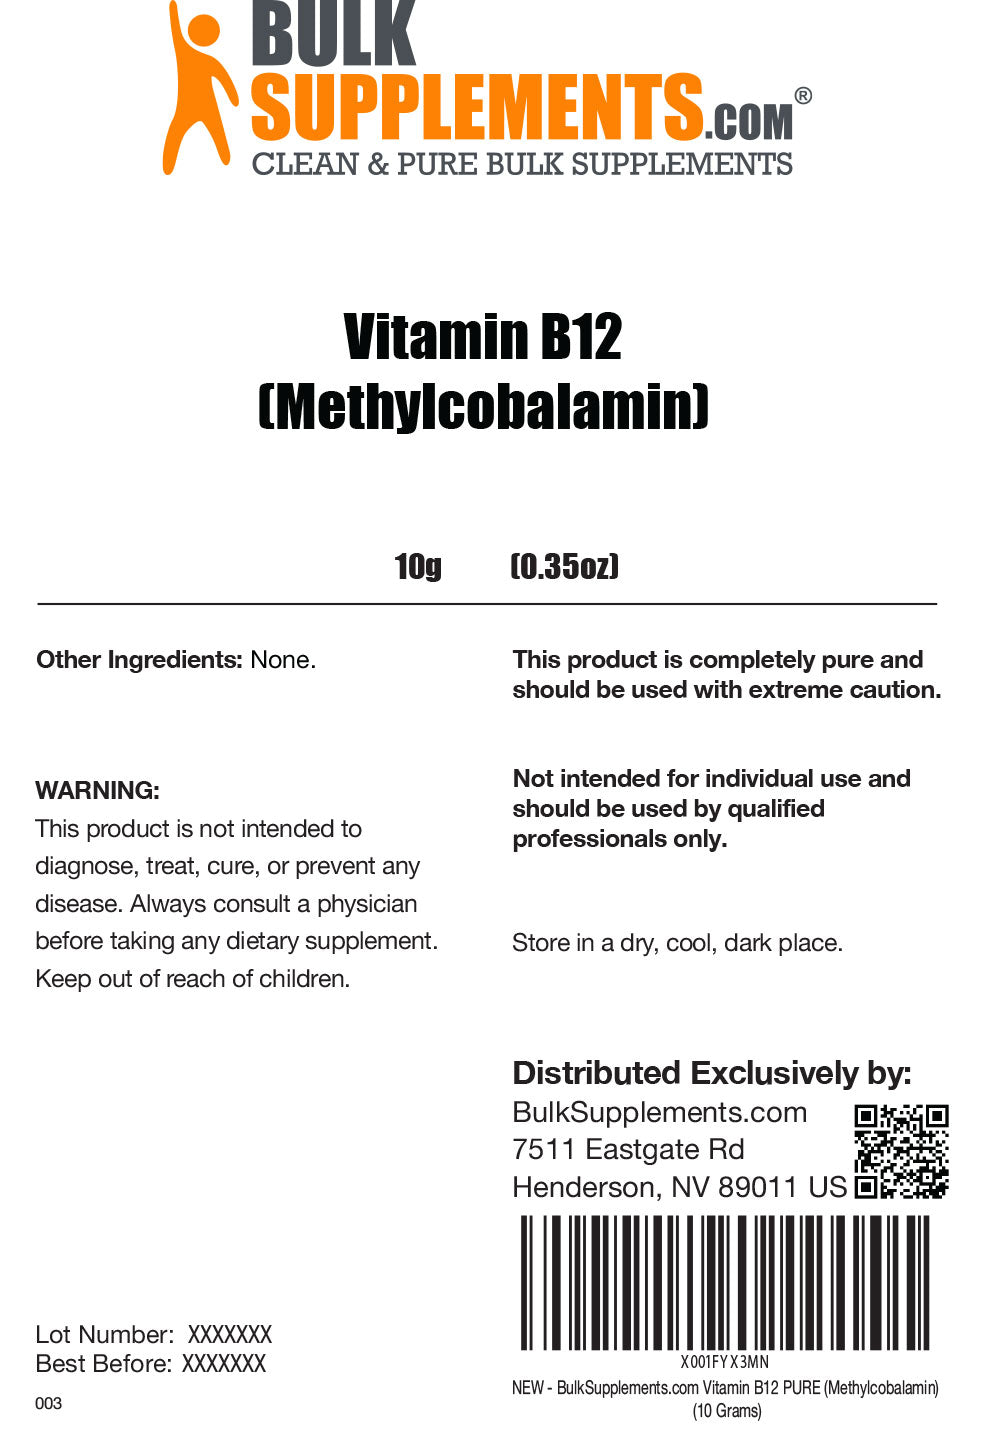 Vitamin B12 Pure Methylcobalamin powder label